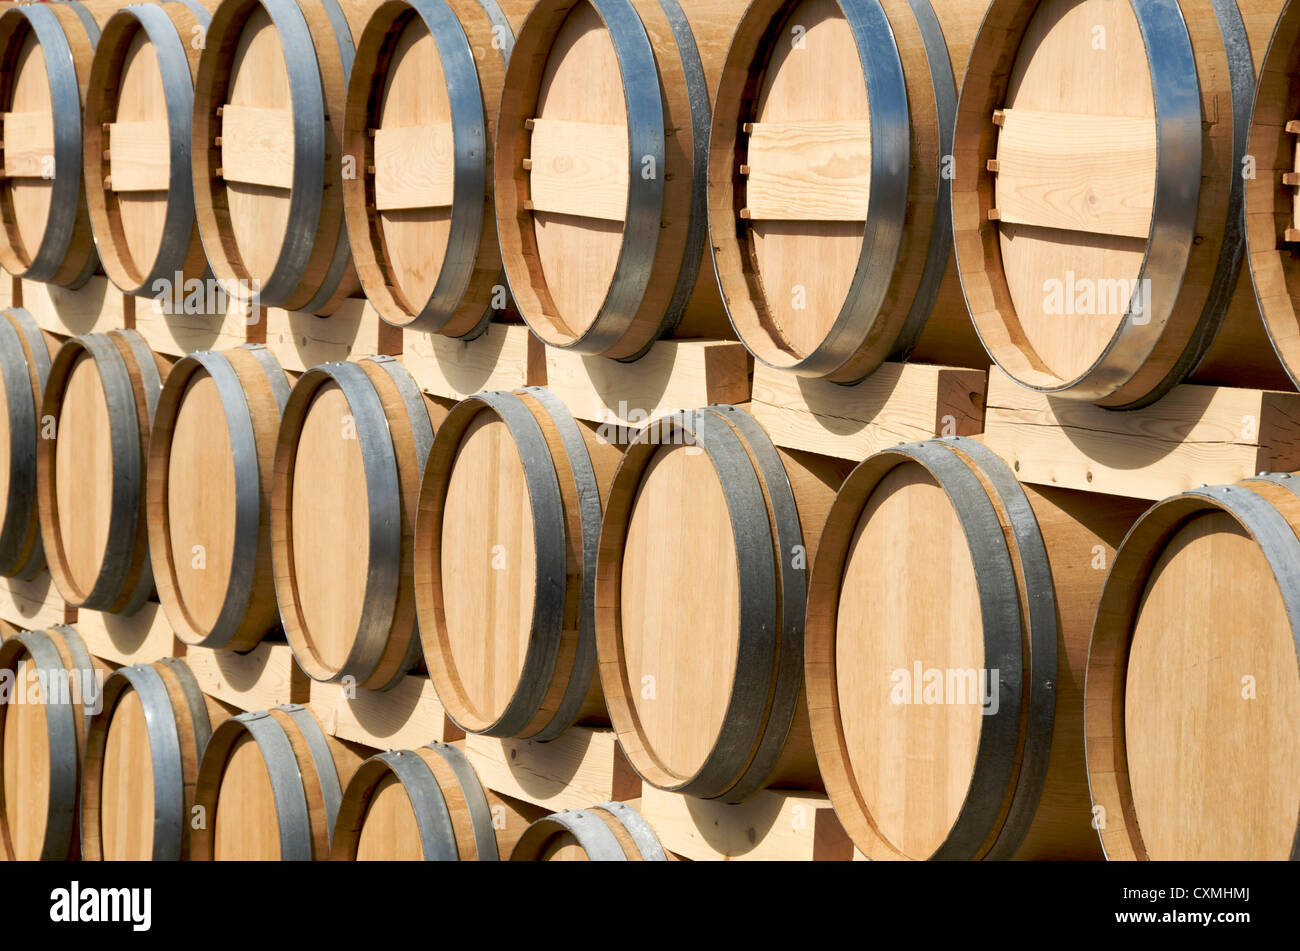 Wooden wine barrels, Bordeaux, Gironde, France Stock Photo